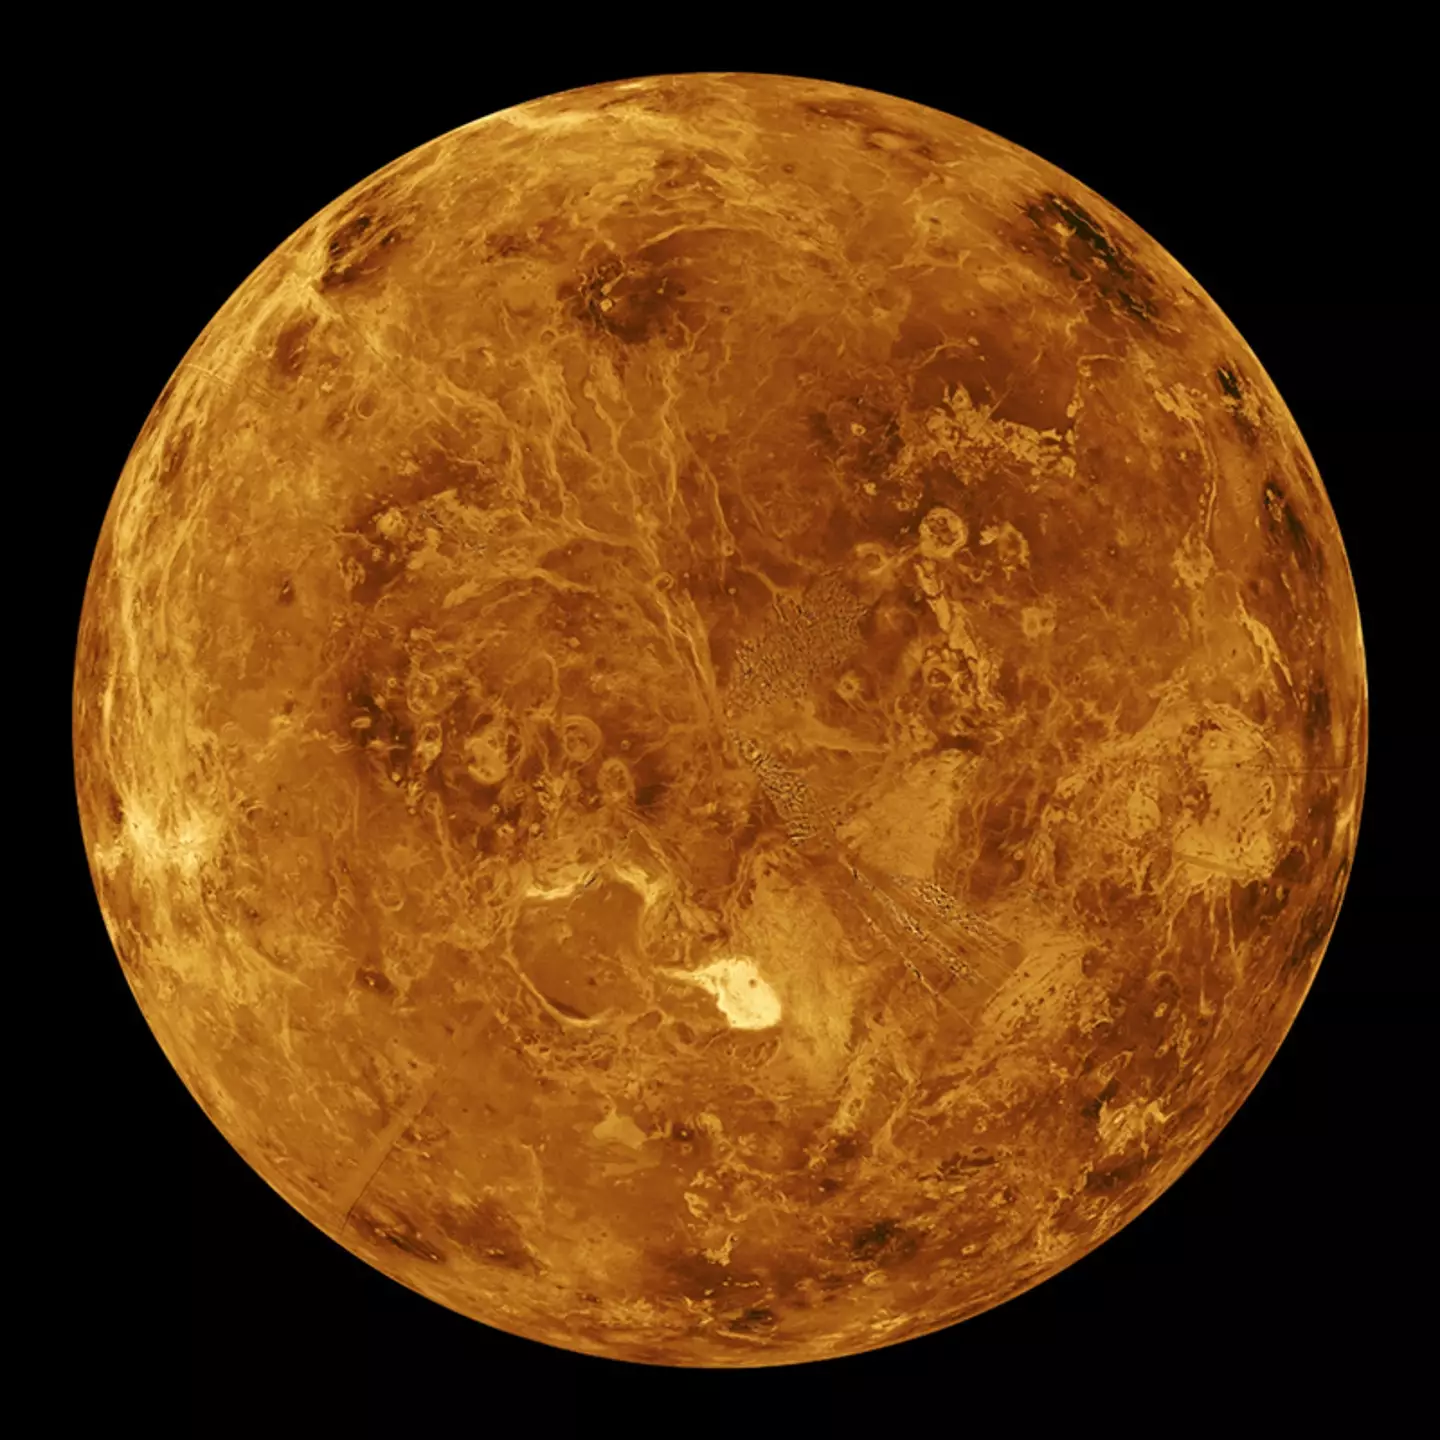 Computer-simulated image of Venus.